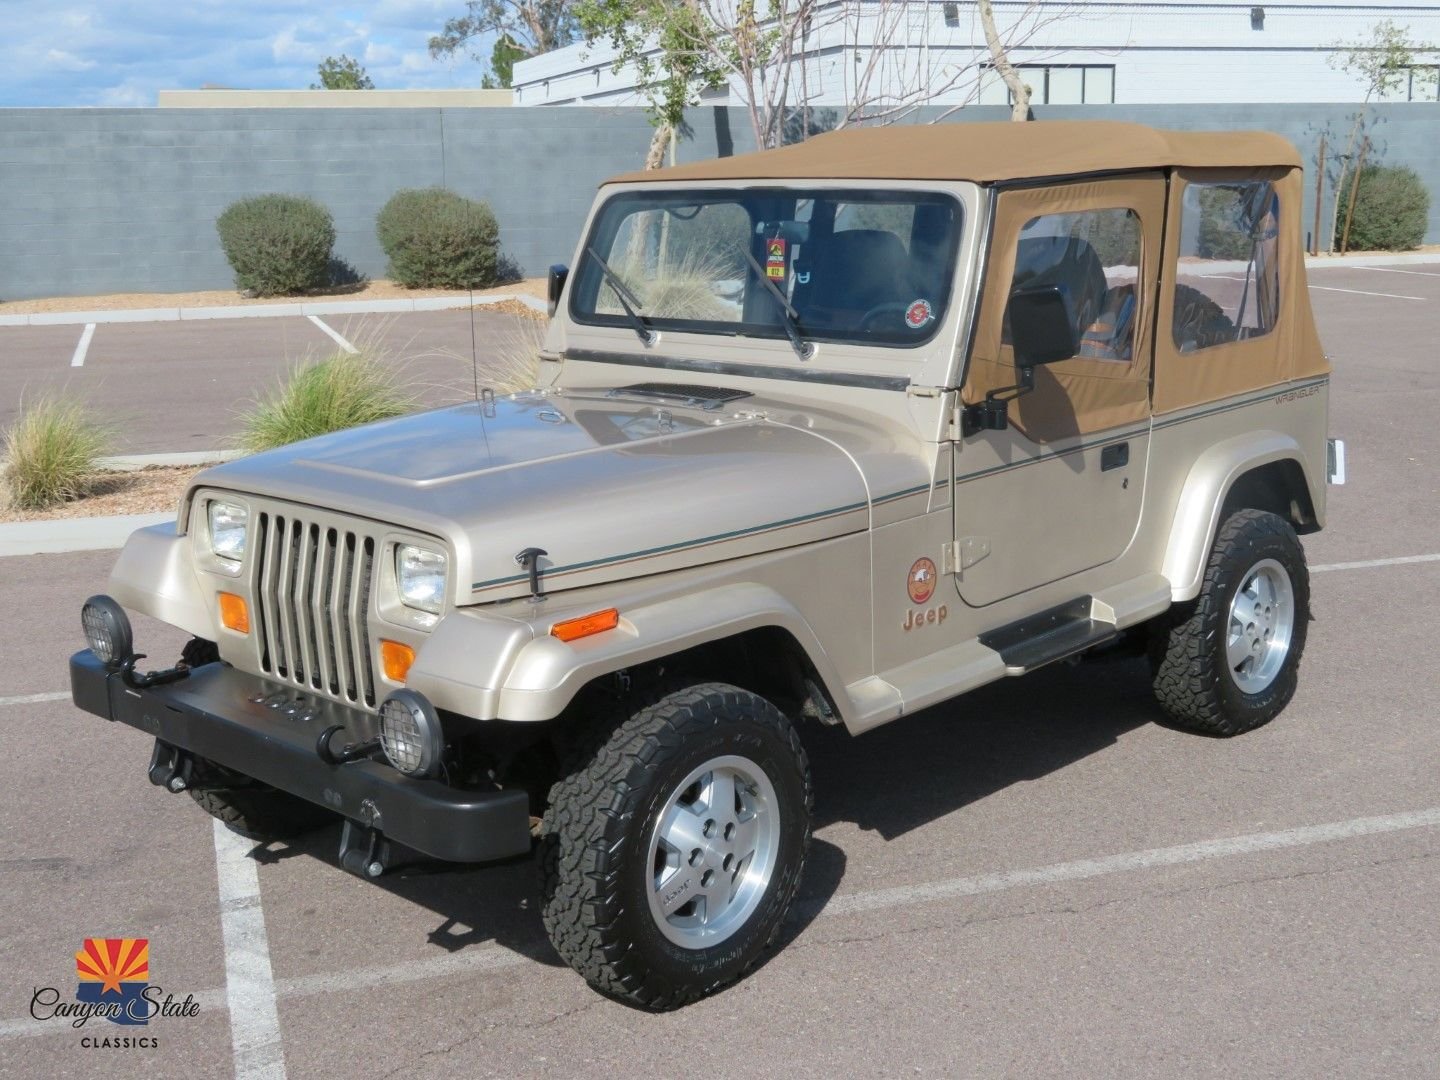 1993 Jeep Wrangler | Canyon State Classics